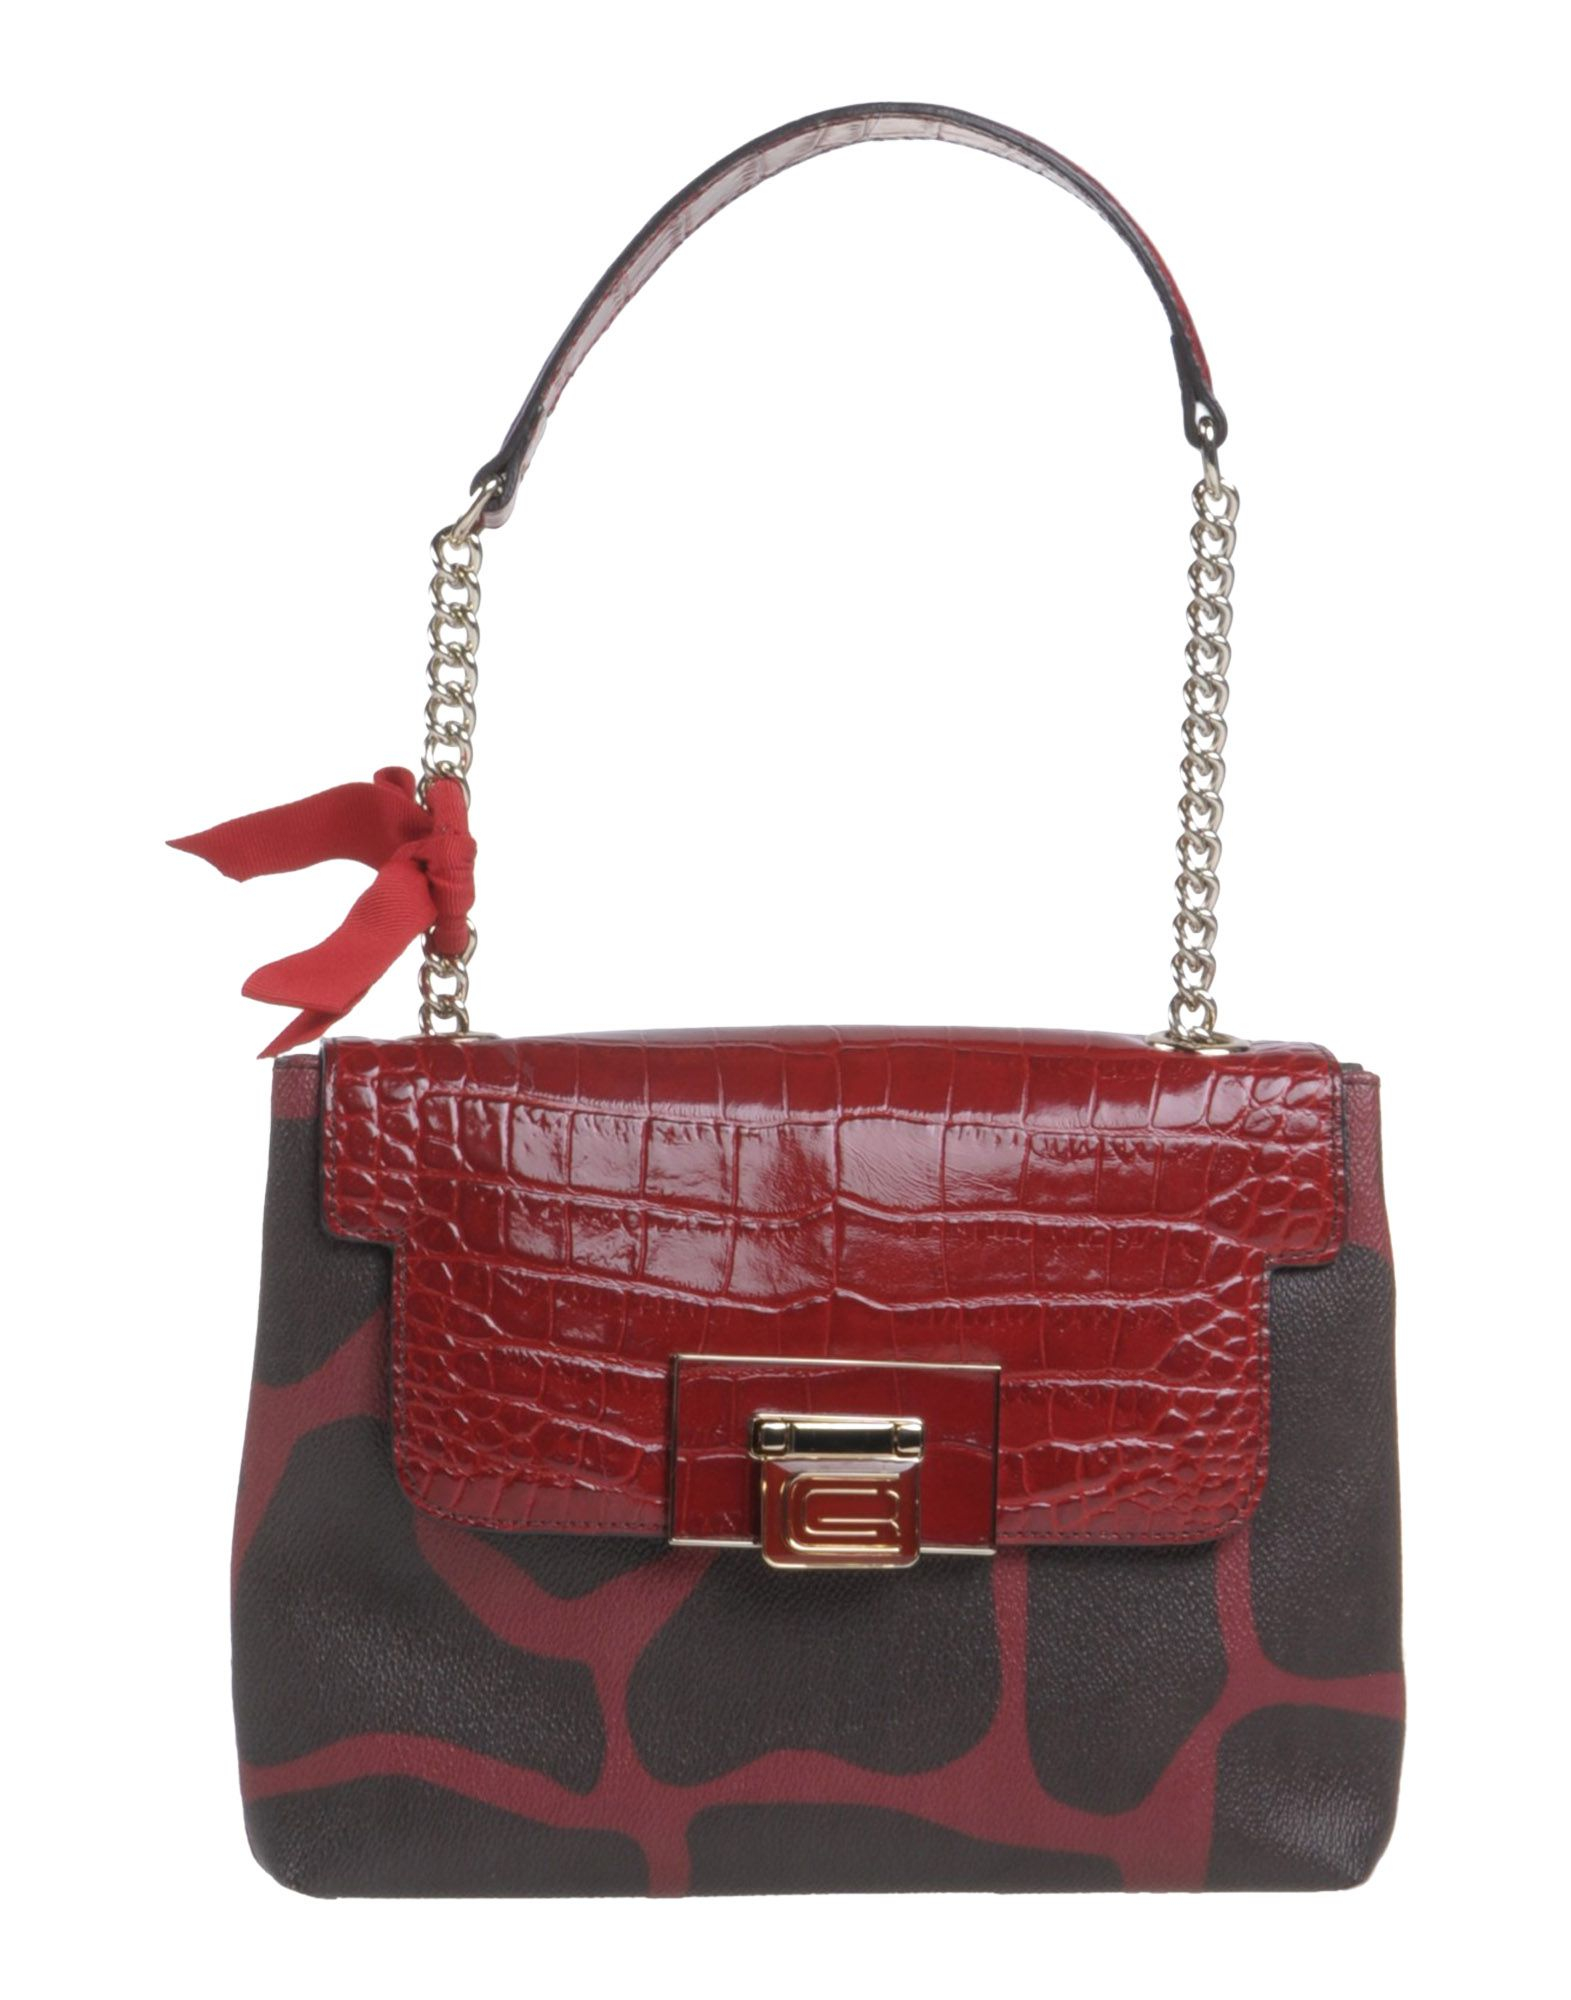 Lyst - Class Roberto Cavalli Handbag in Red